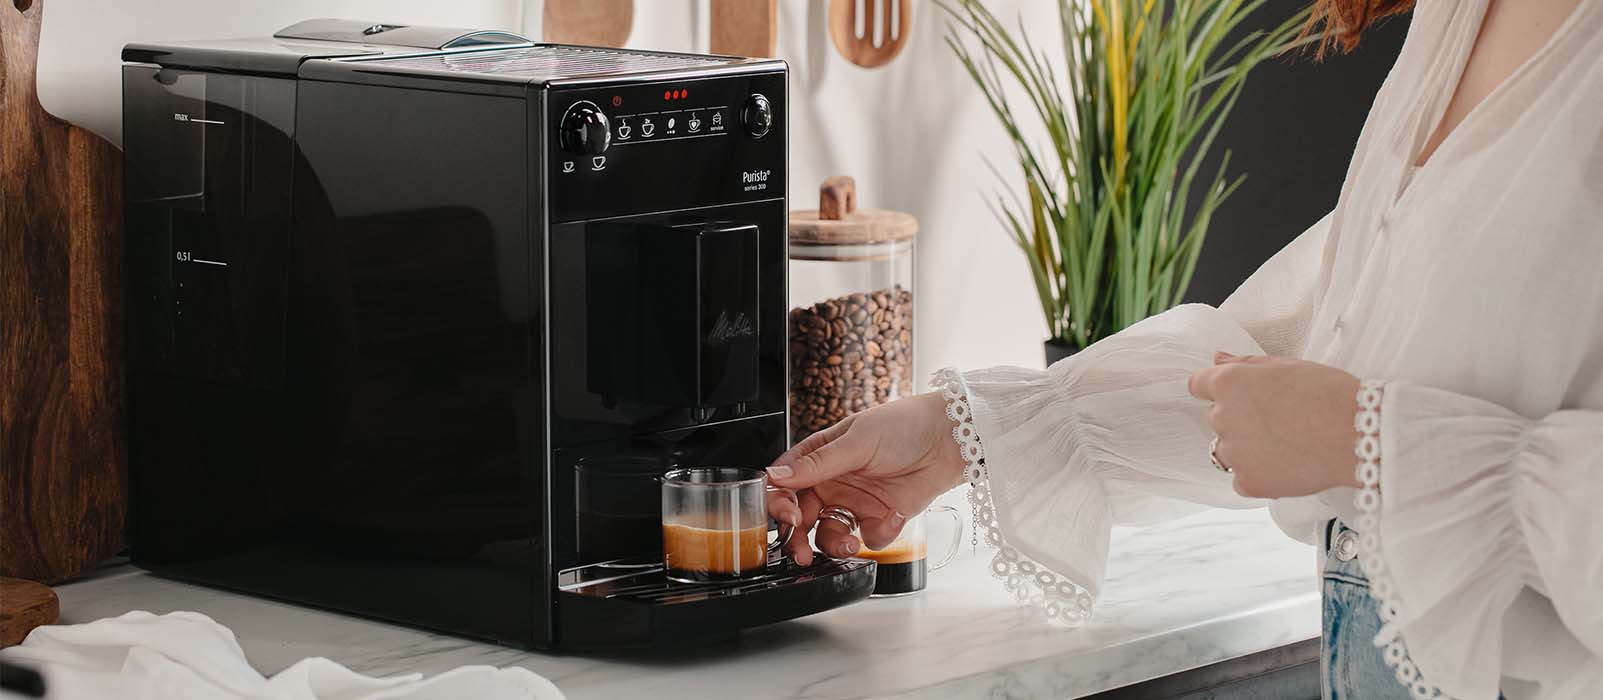 Une machine à café grain abordable ! La Melitta Purista Pure Black ? 